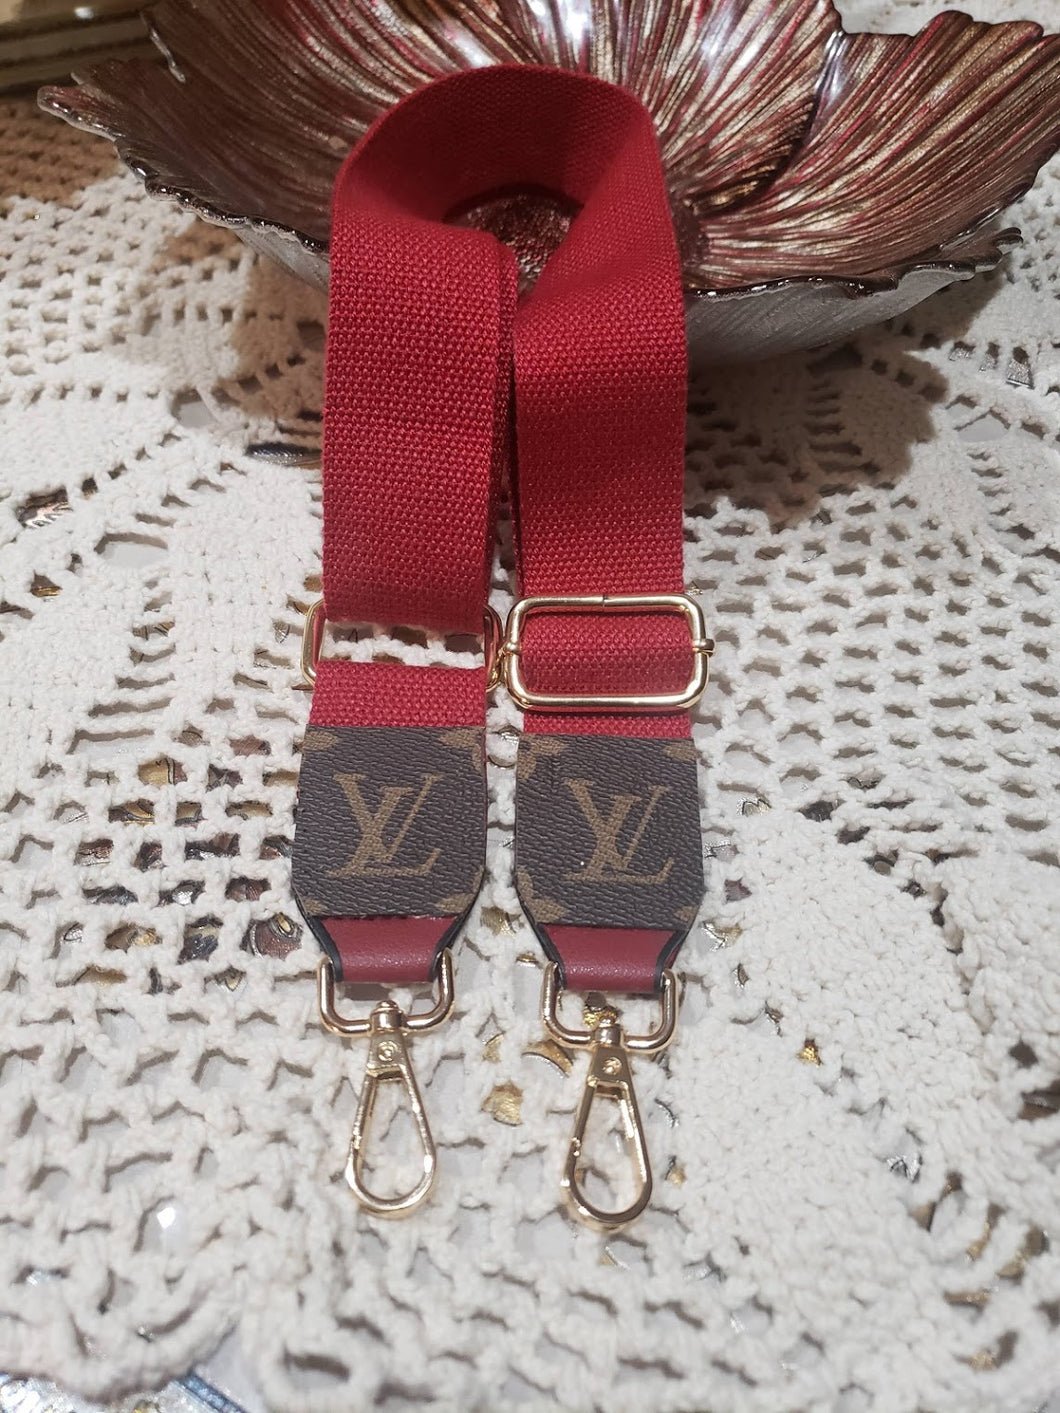 A purse strap for Louis Vuitton Speedy - YouTube